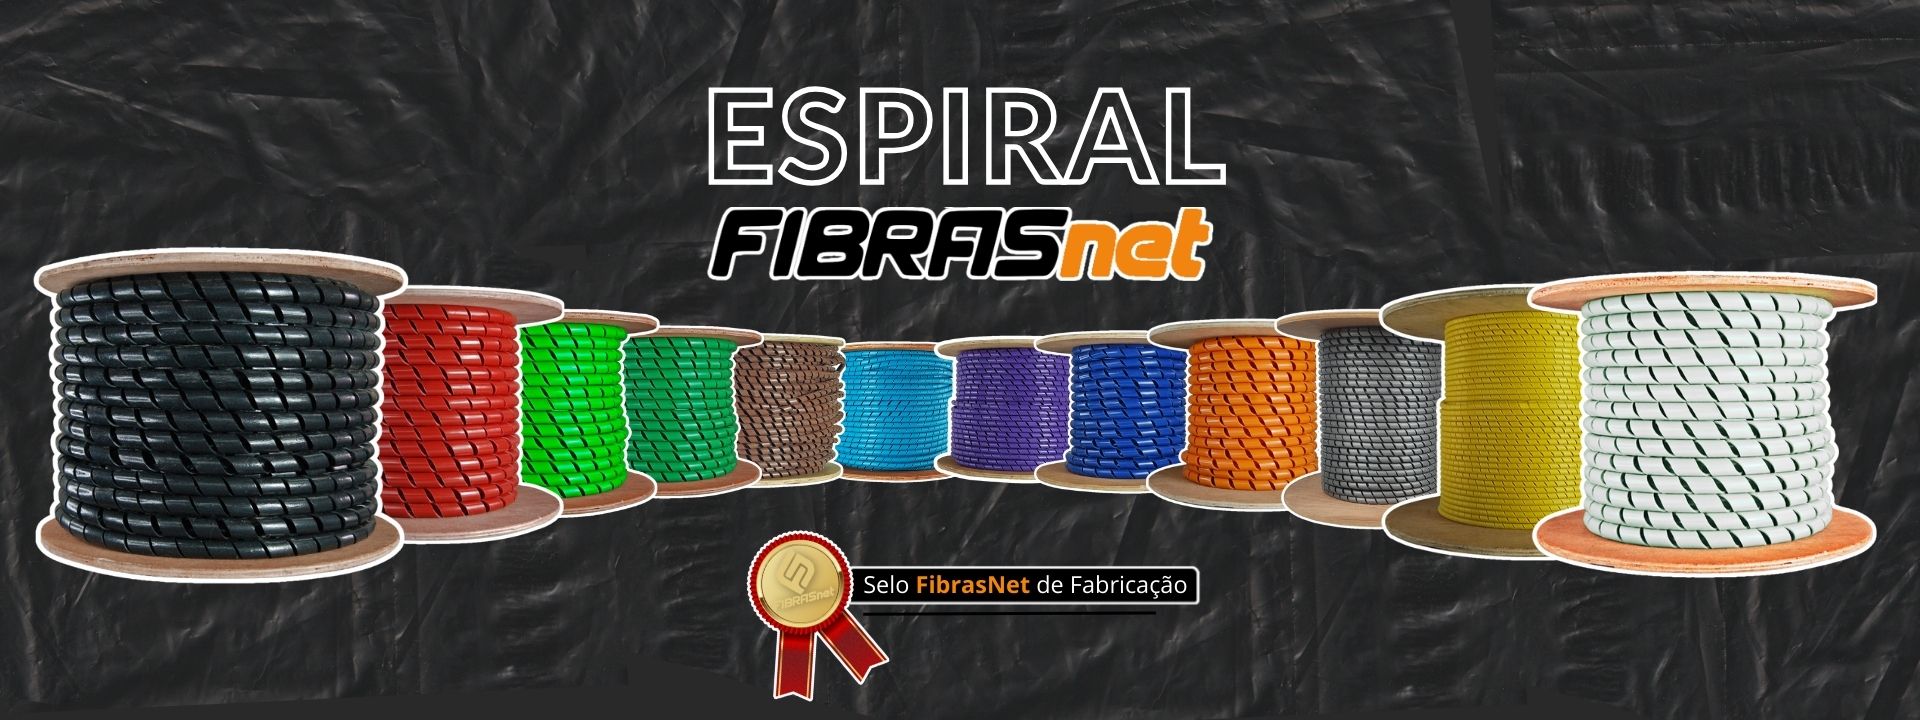 Espiral FibrasNet/preto